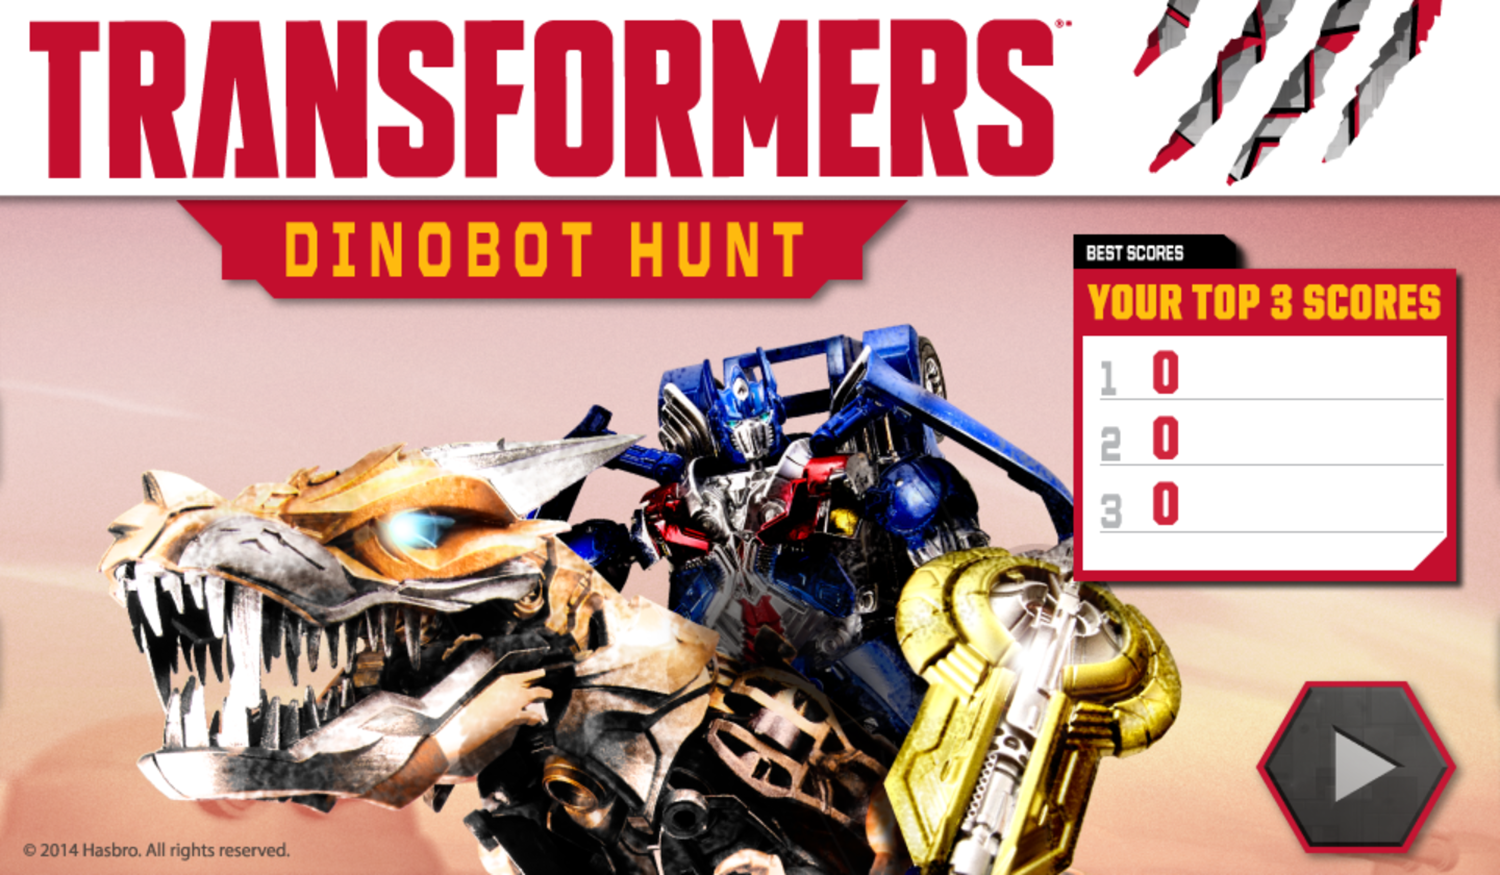 Transformers Dinobot Hunt Game Welcome Screen Screenshot.